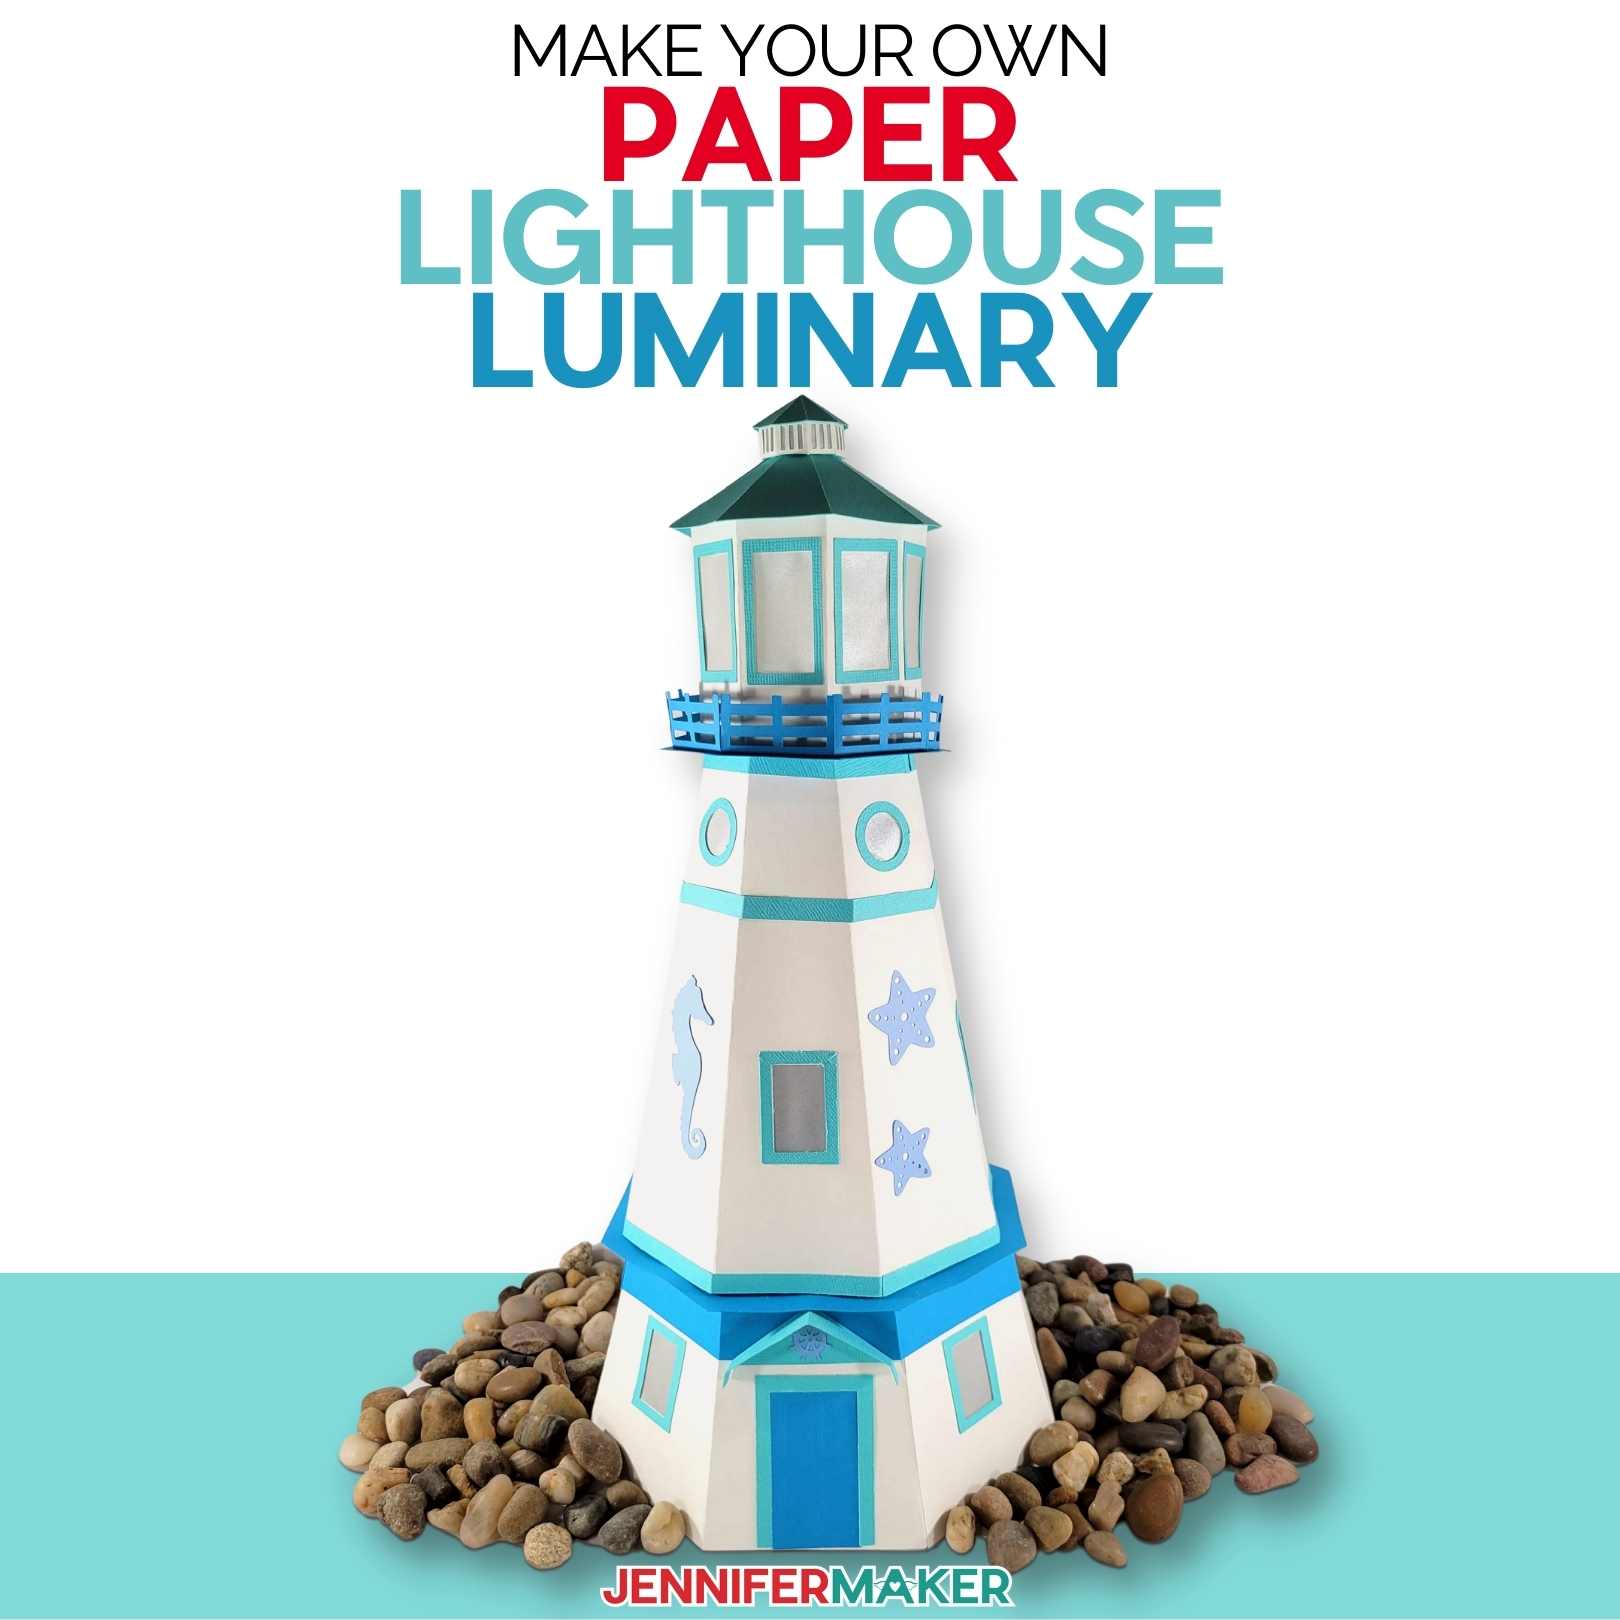 DIY Paper Lighthouse Luminary – A Fun 3D Papercraft!